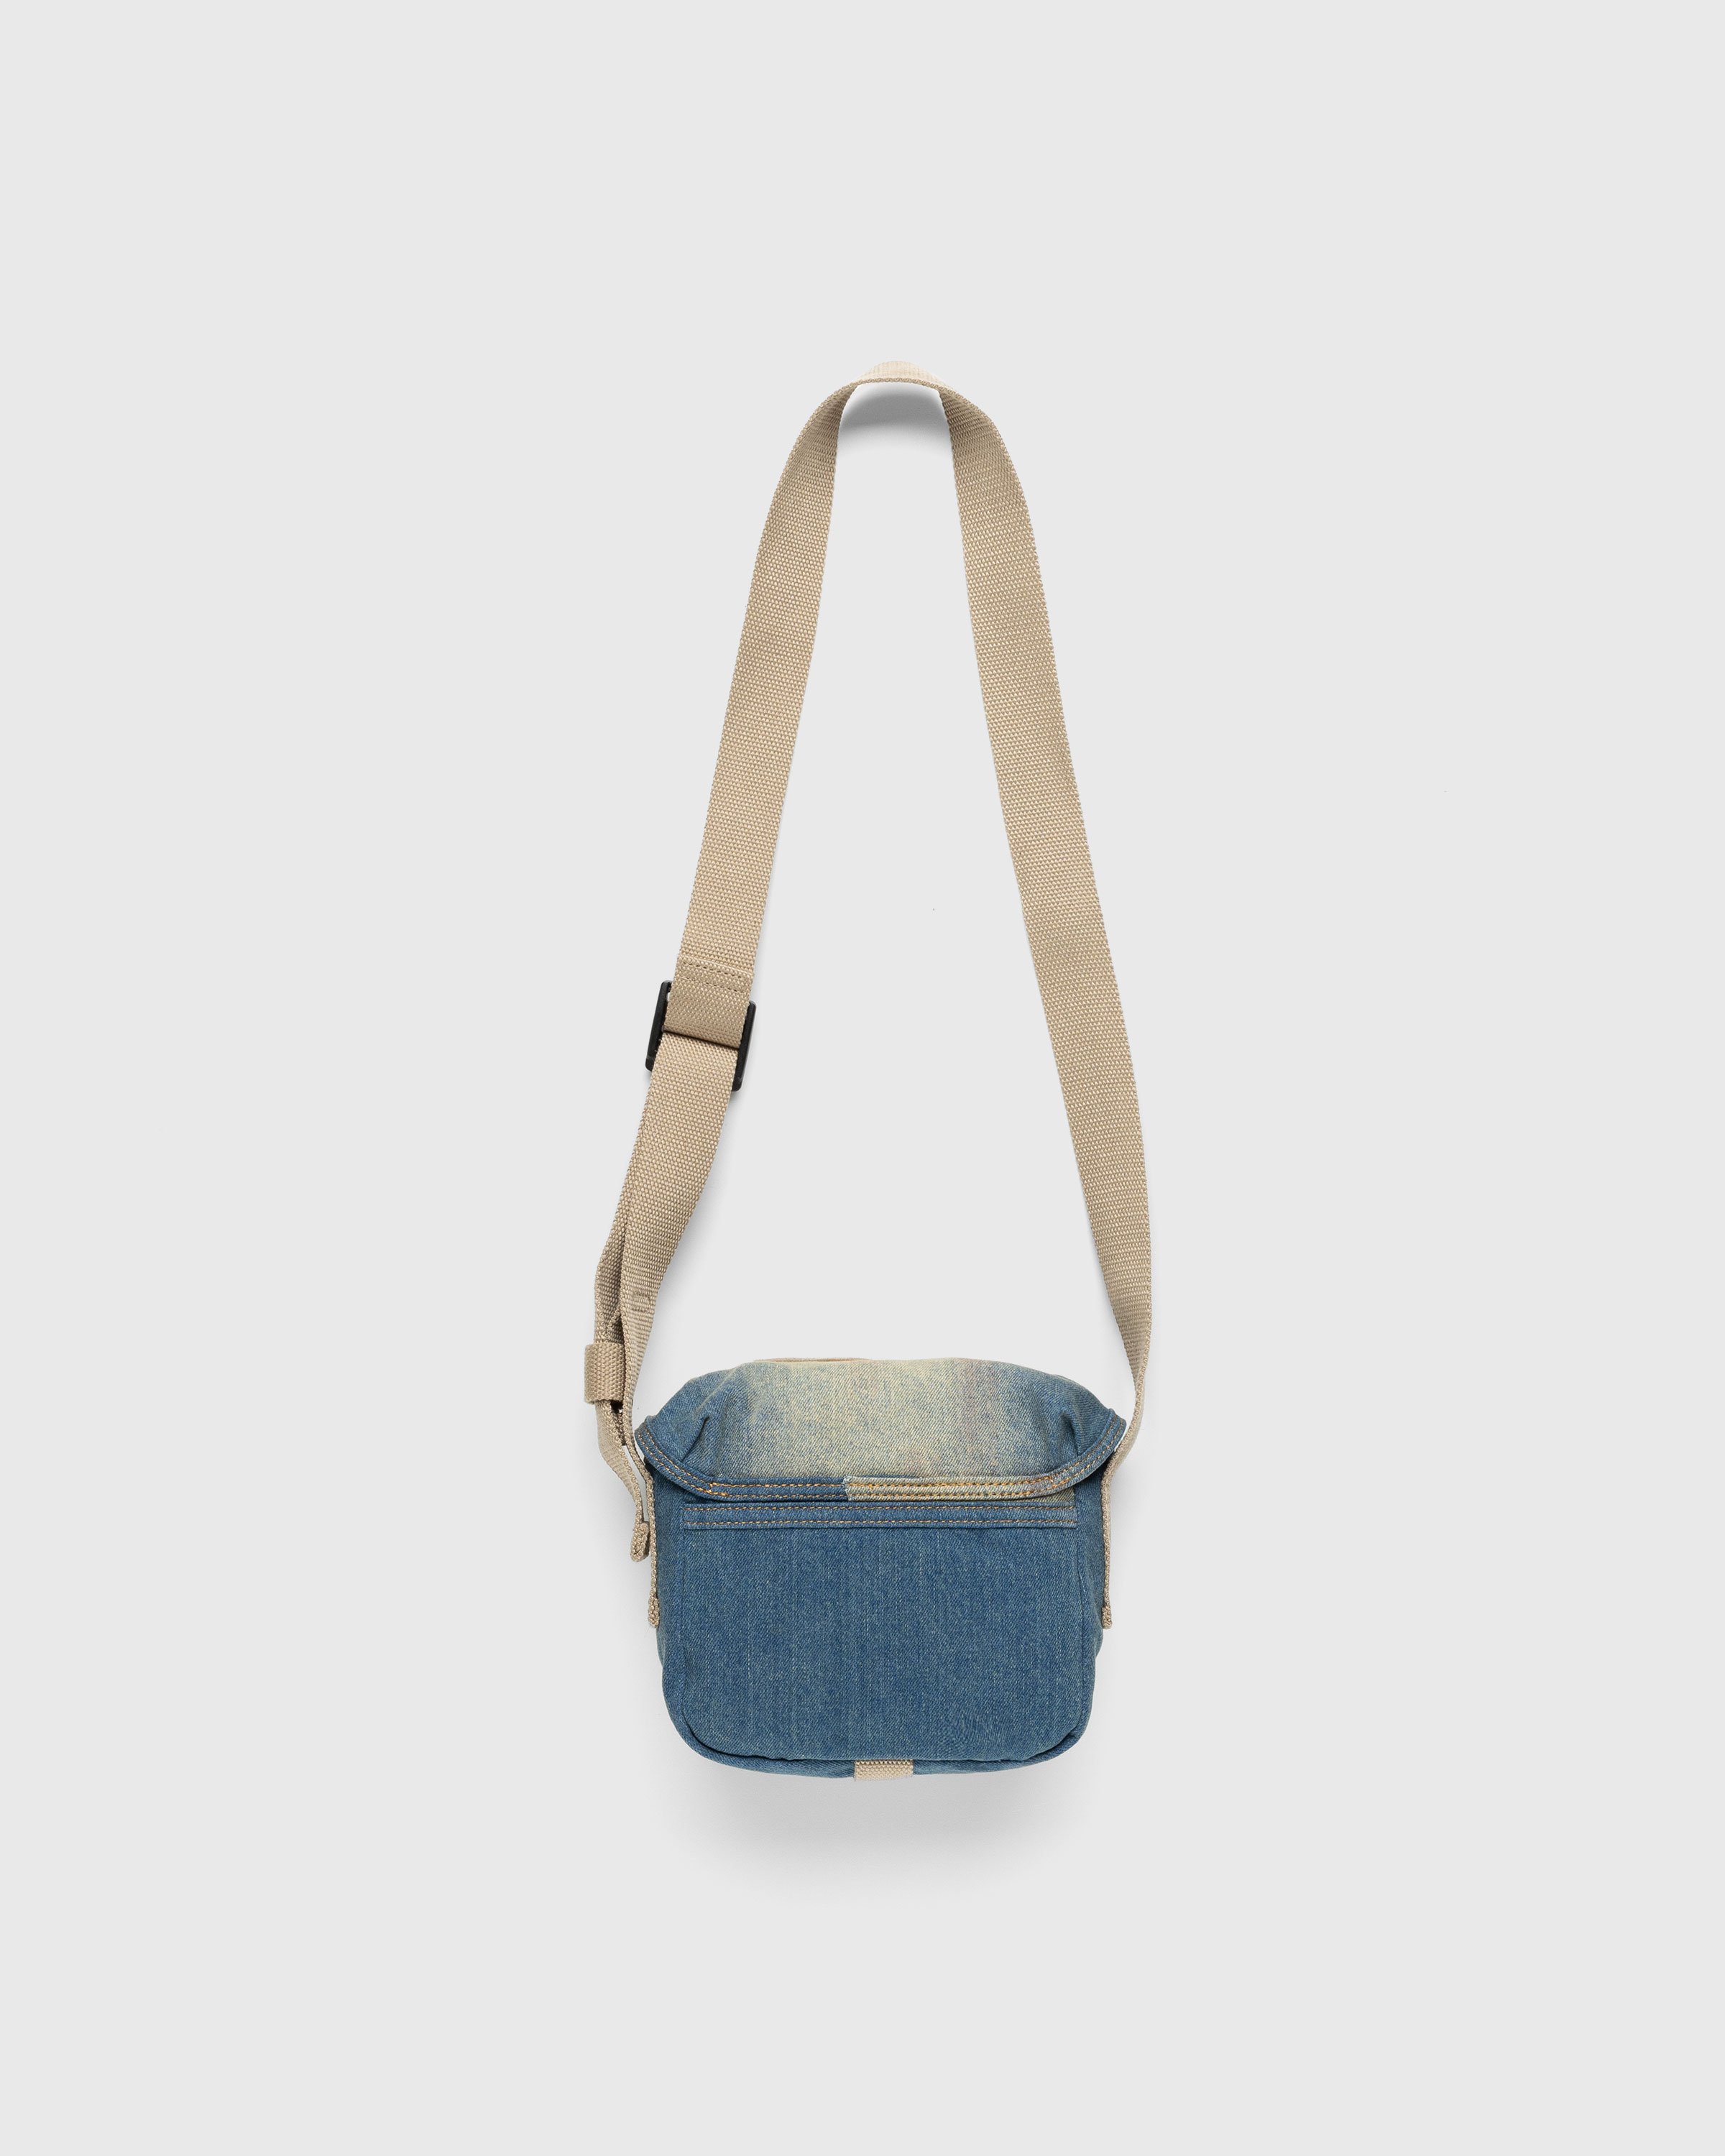 Acne Studios - Mini Messenger Bag Light Blue/Beige - Accessories - Multi - Image 2